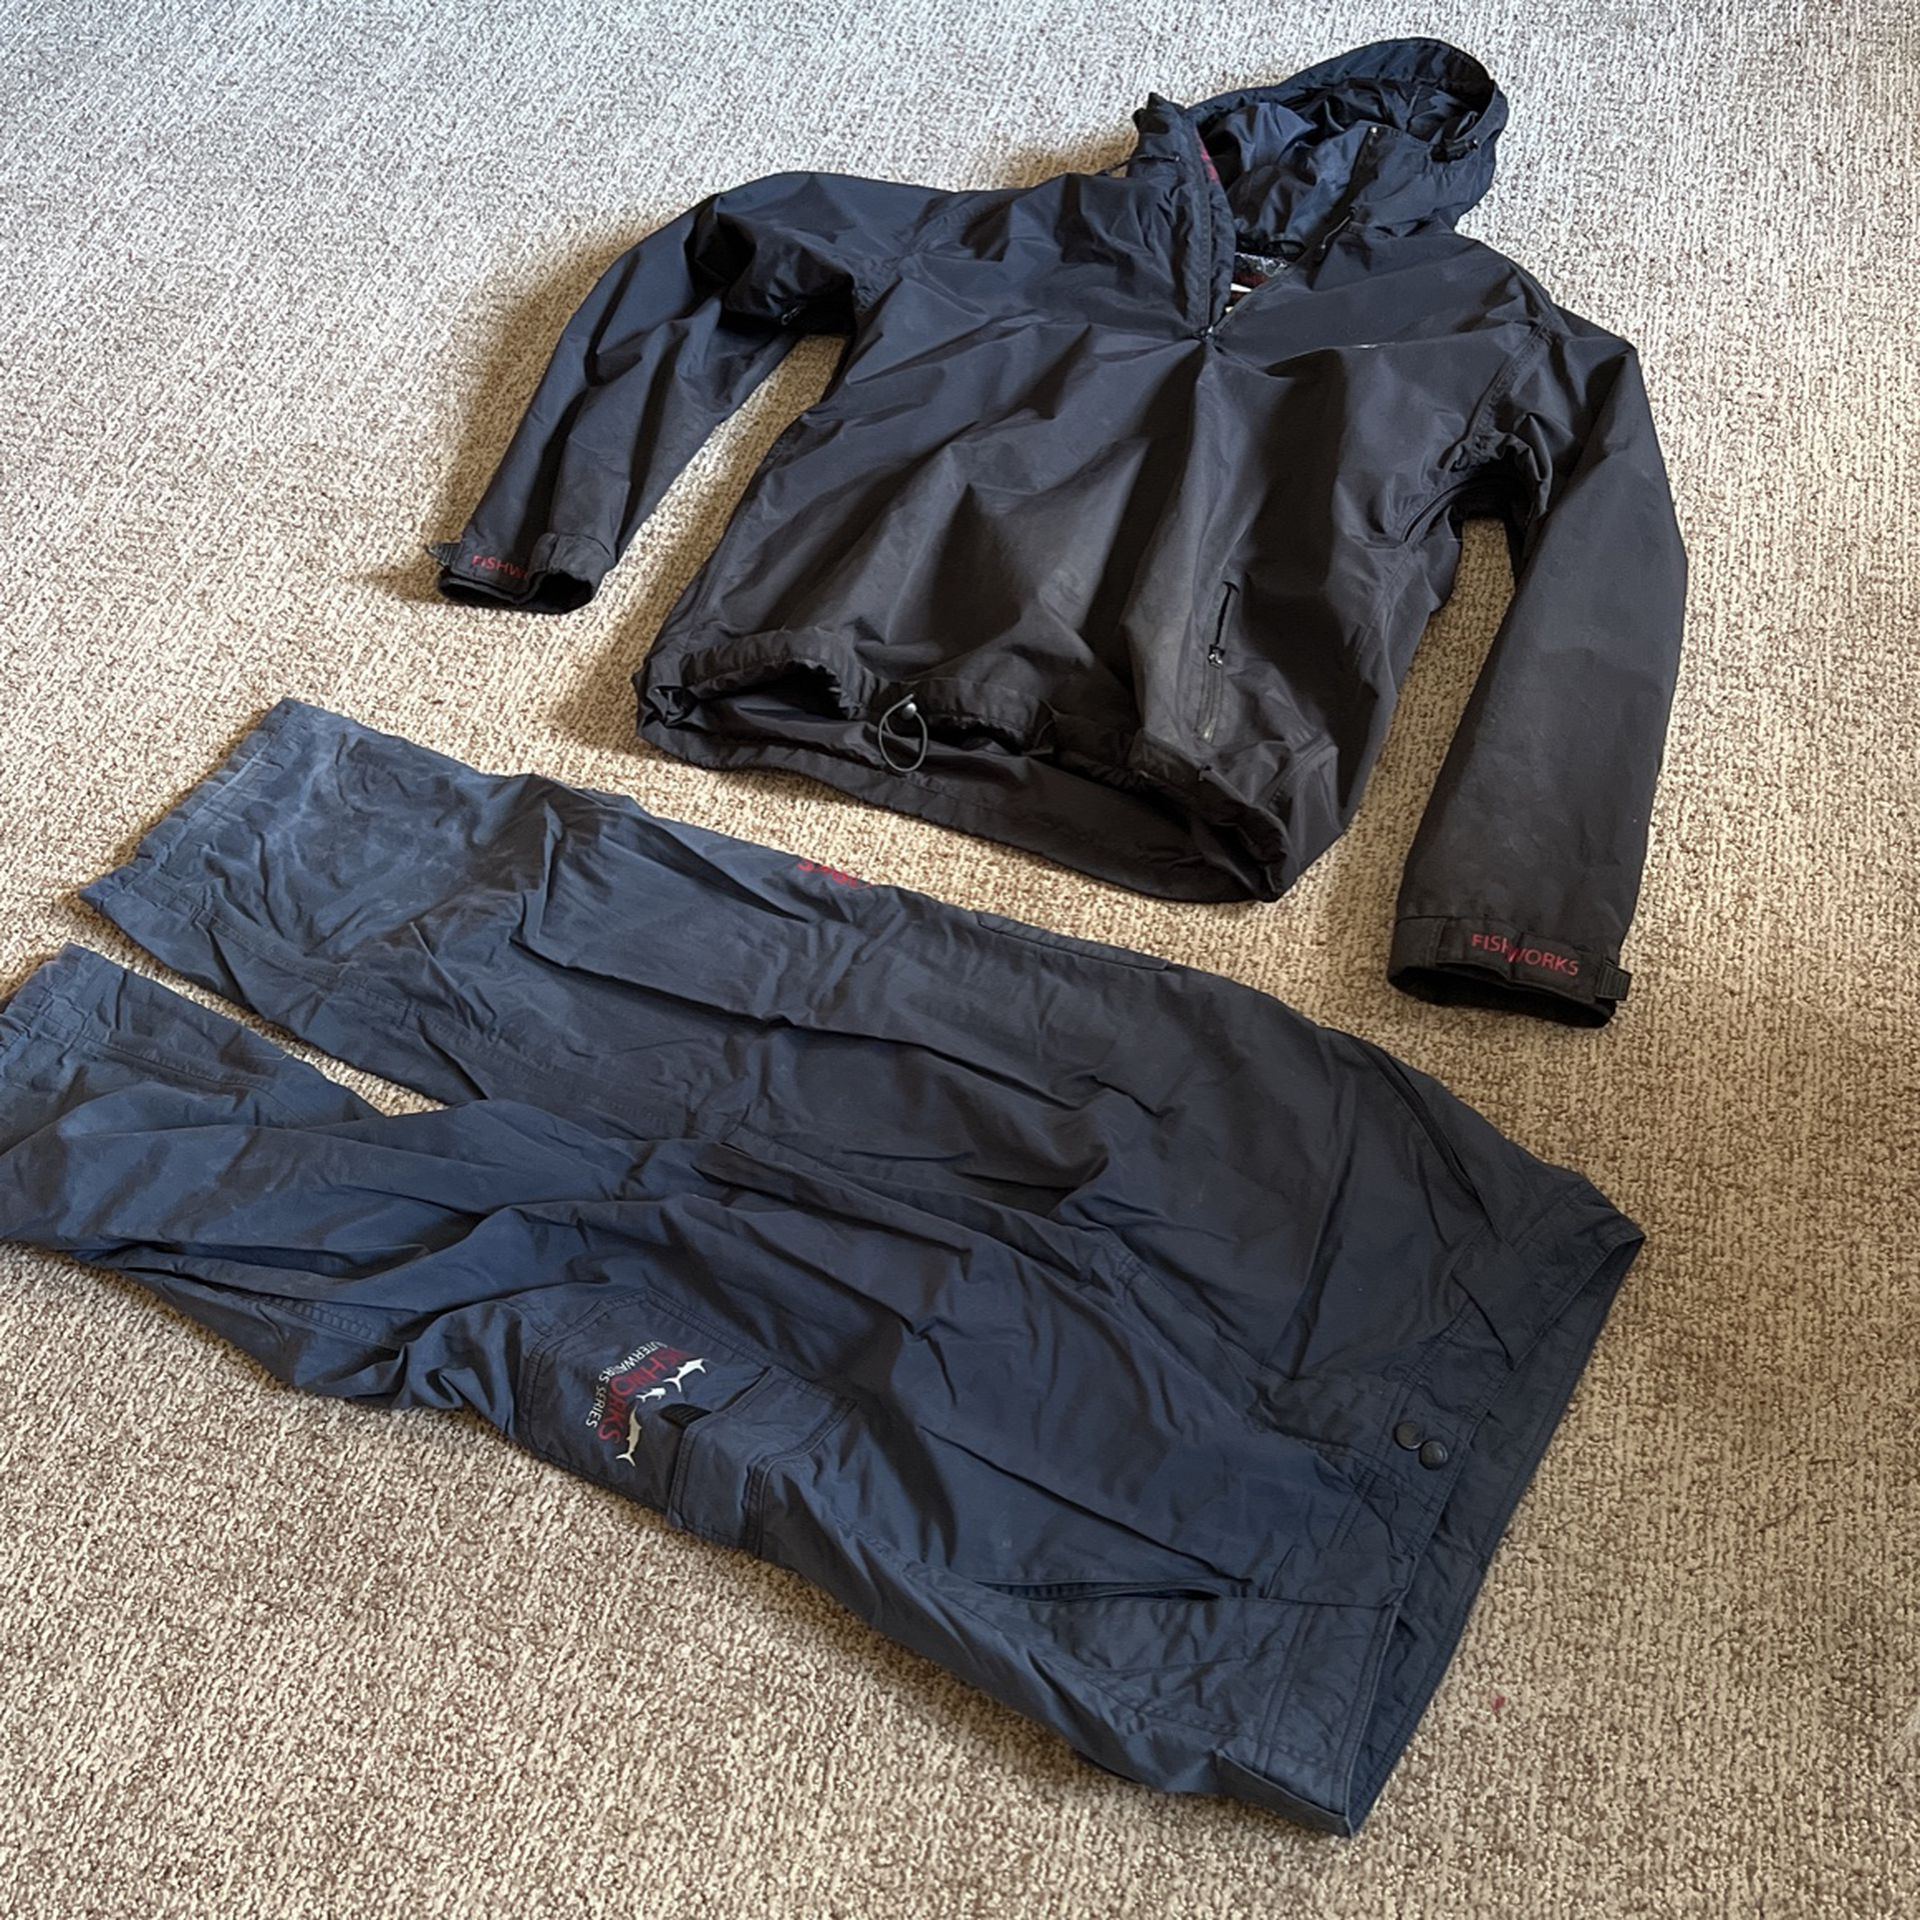 FishWorks Pants & Hoodie Jacket (L) for Sale in Temecula, CA - OfferUp